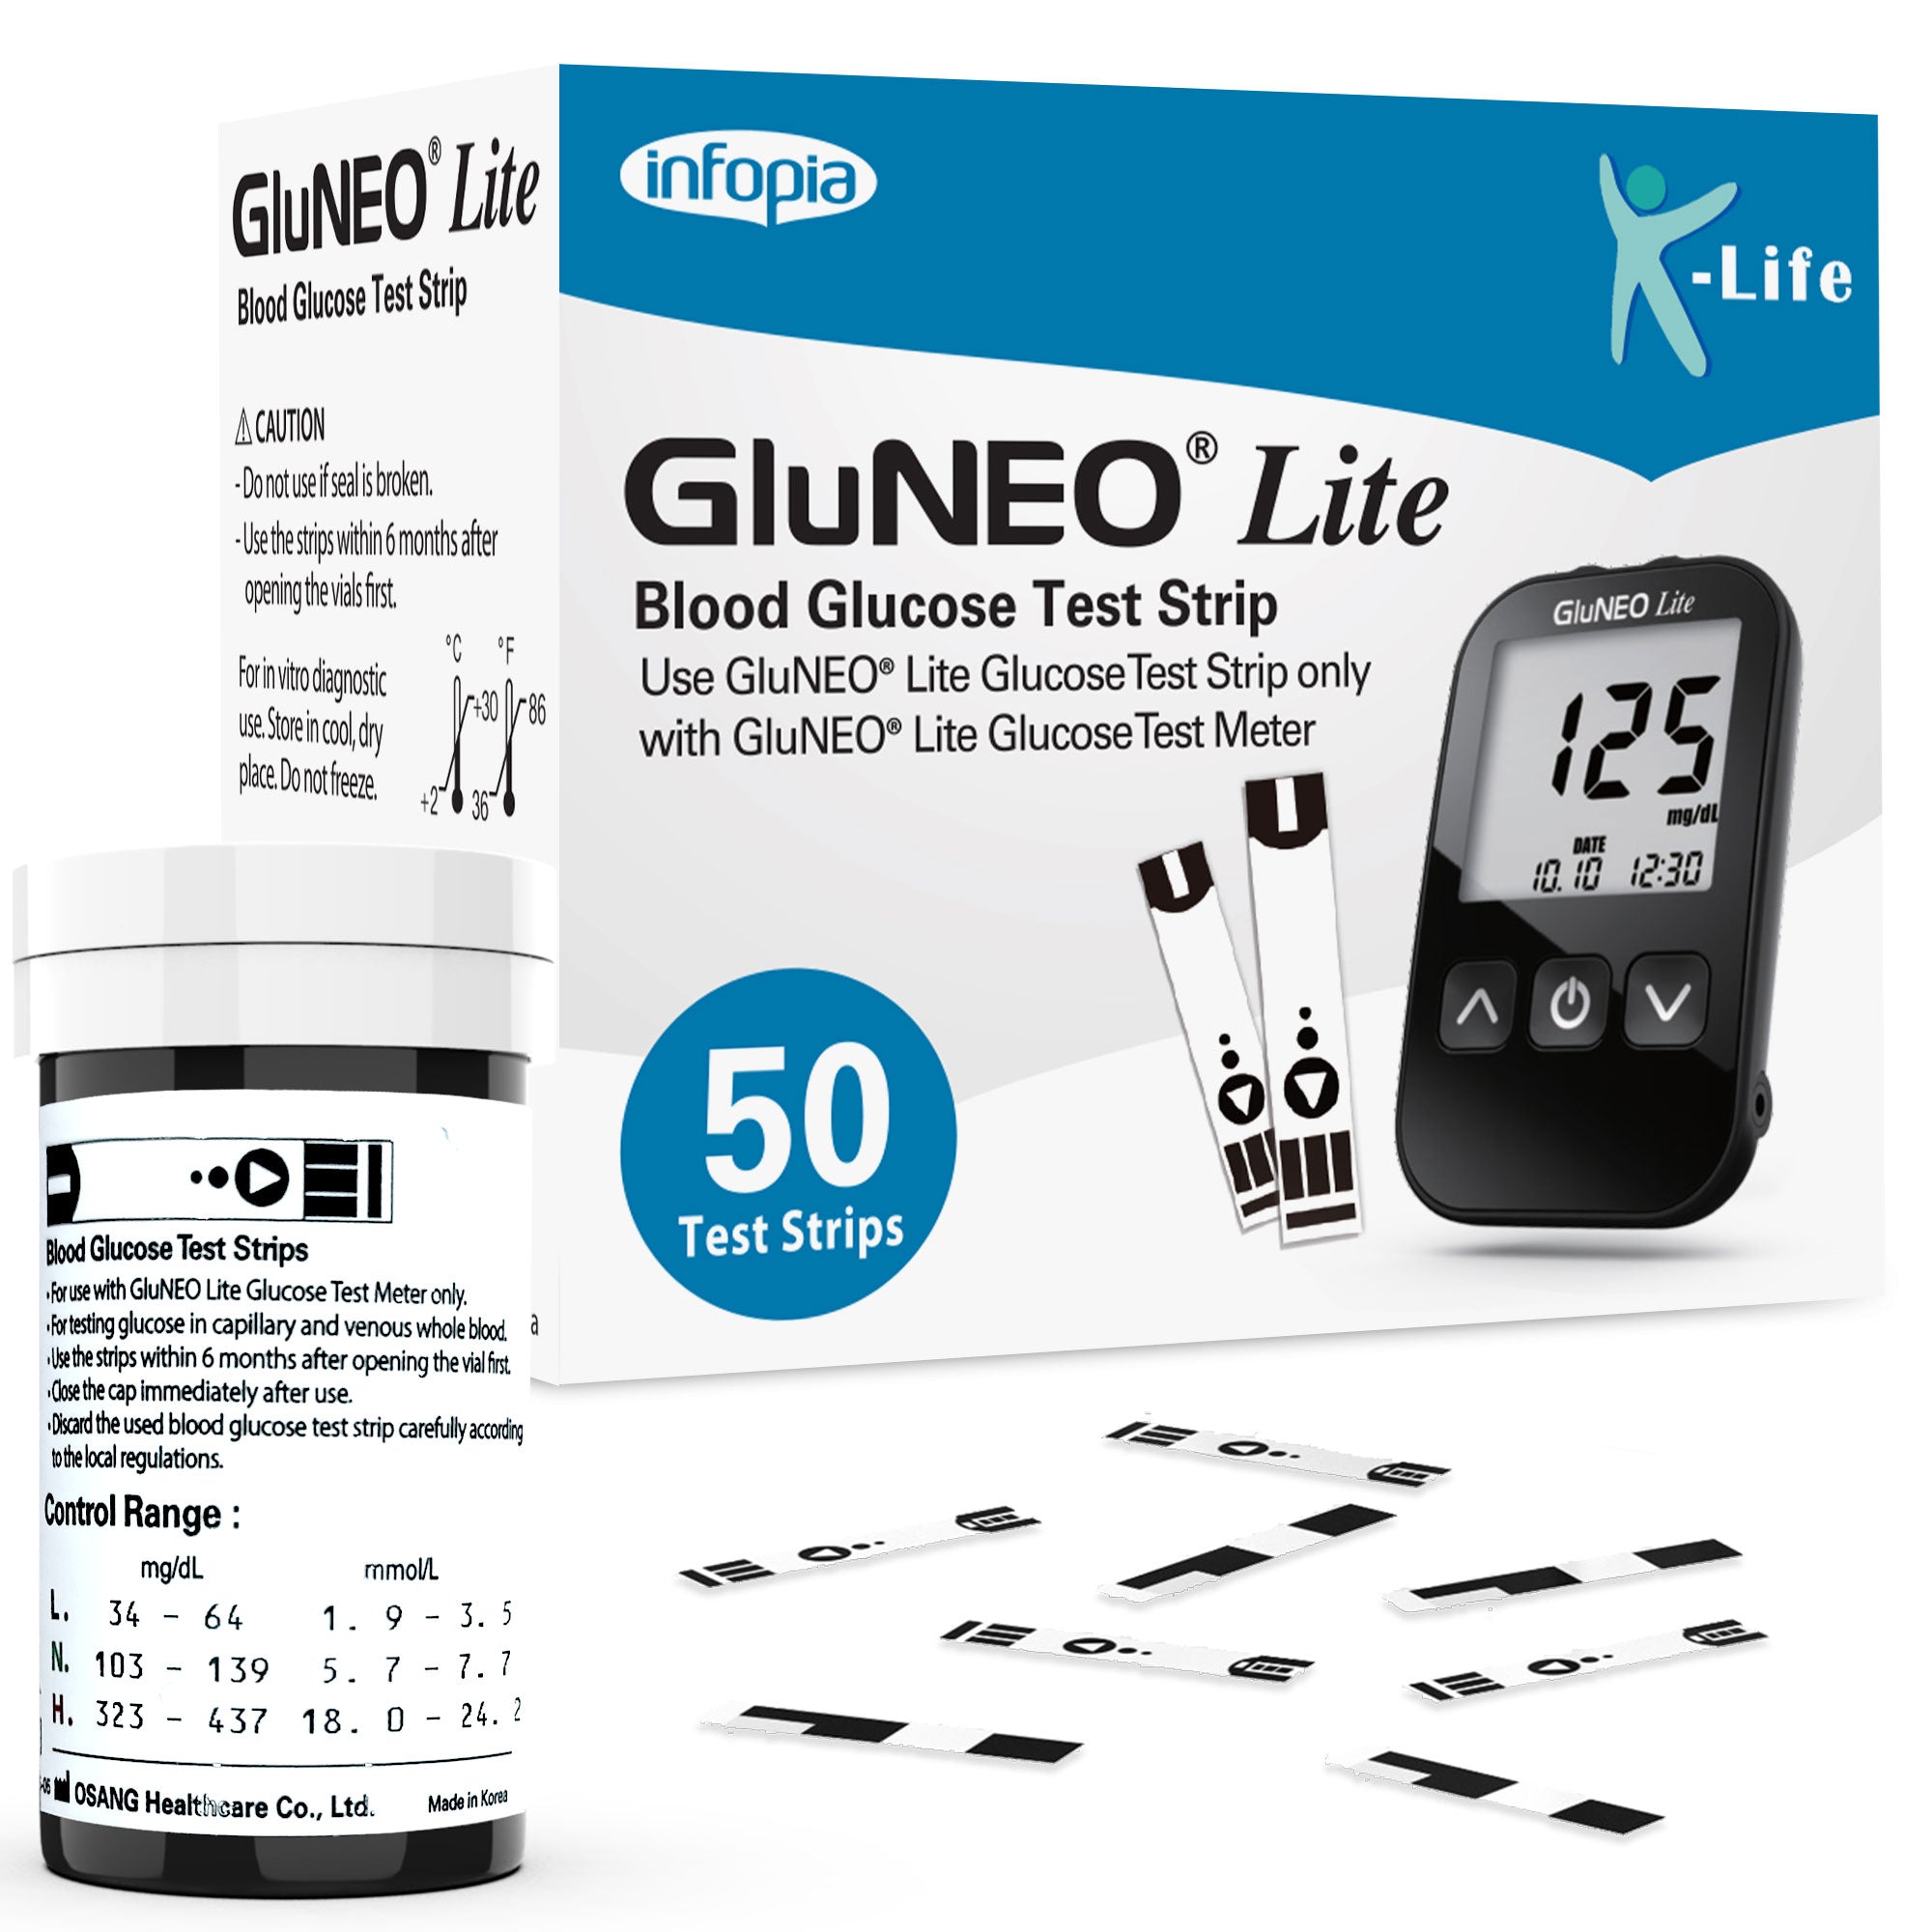 K-life GluneoLite Blood Glucose Sugar Testing 50 Strips